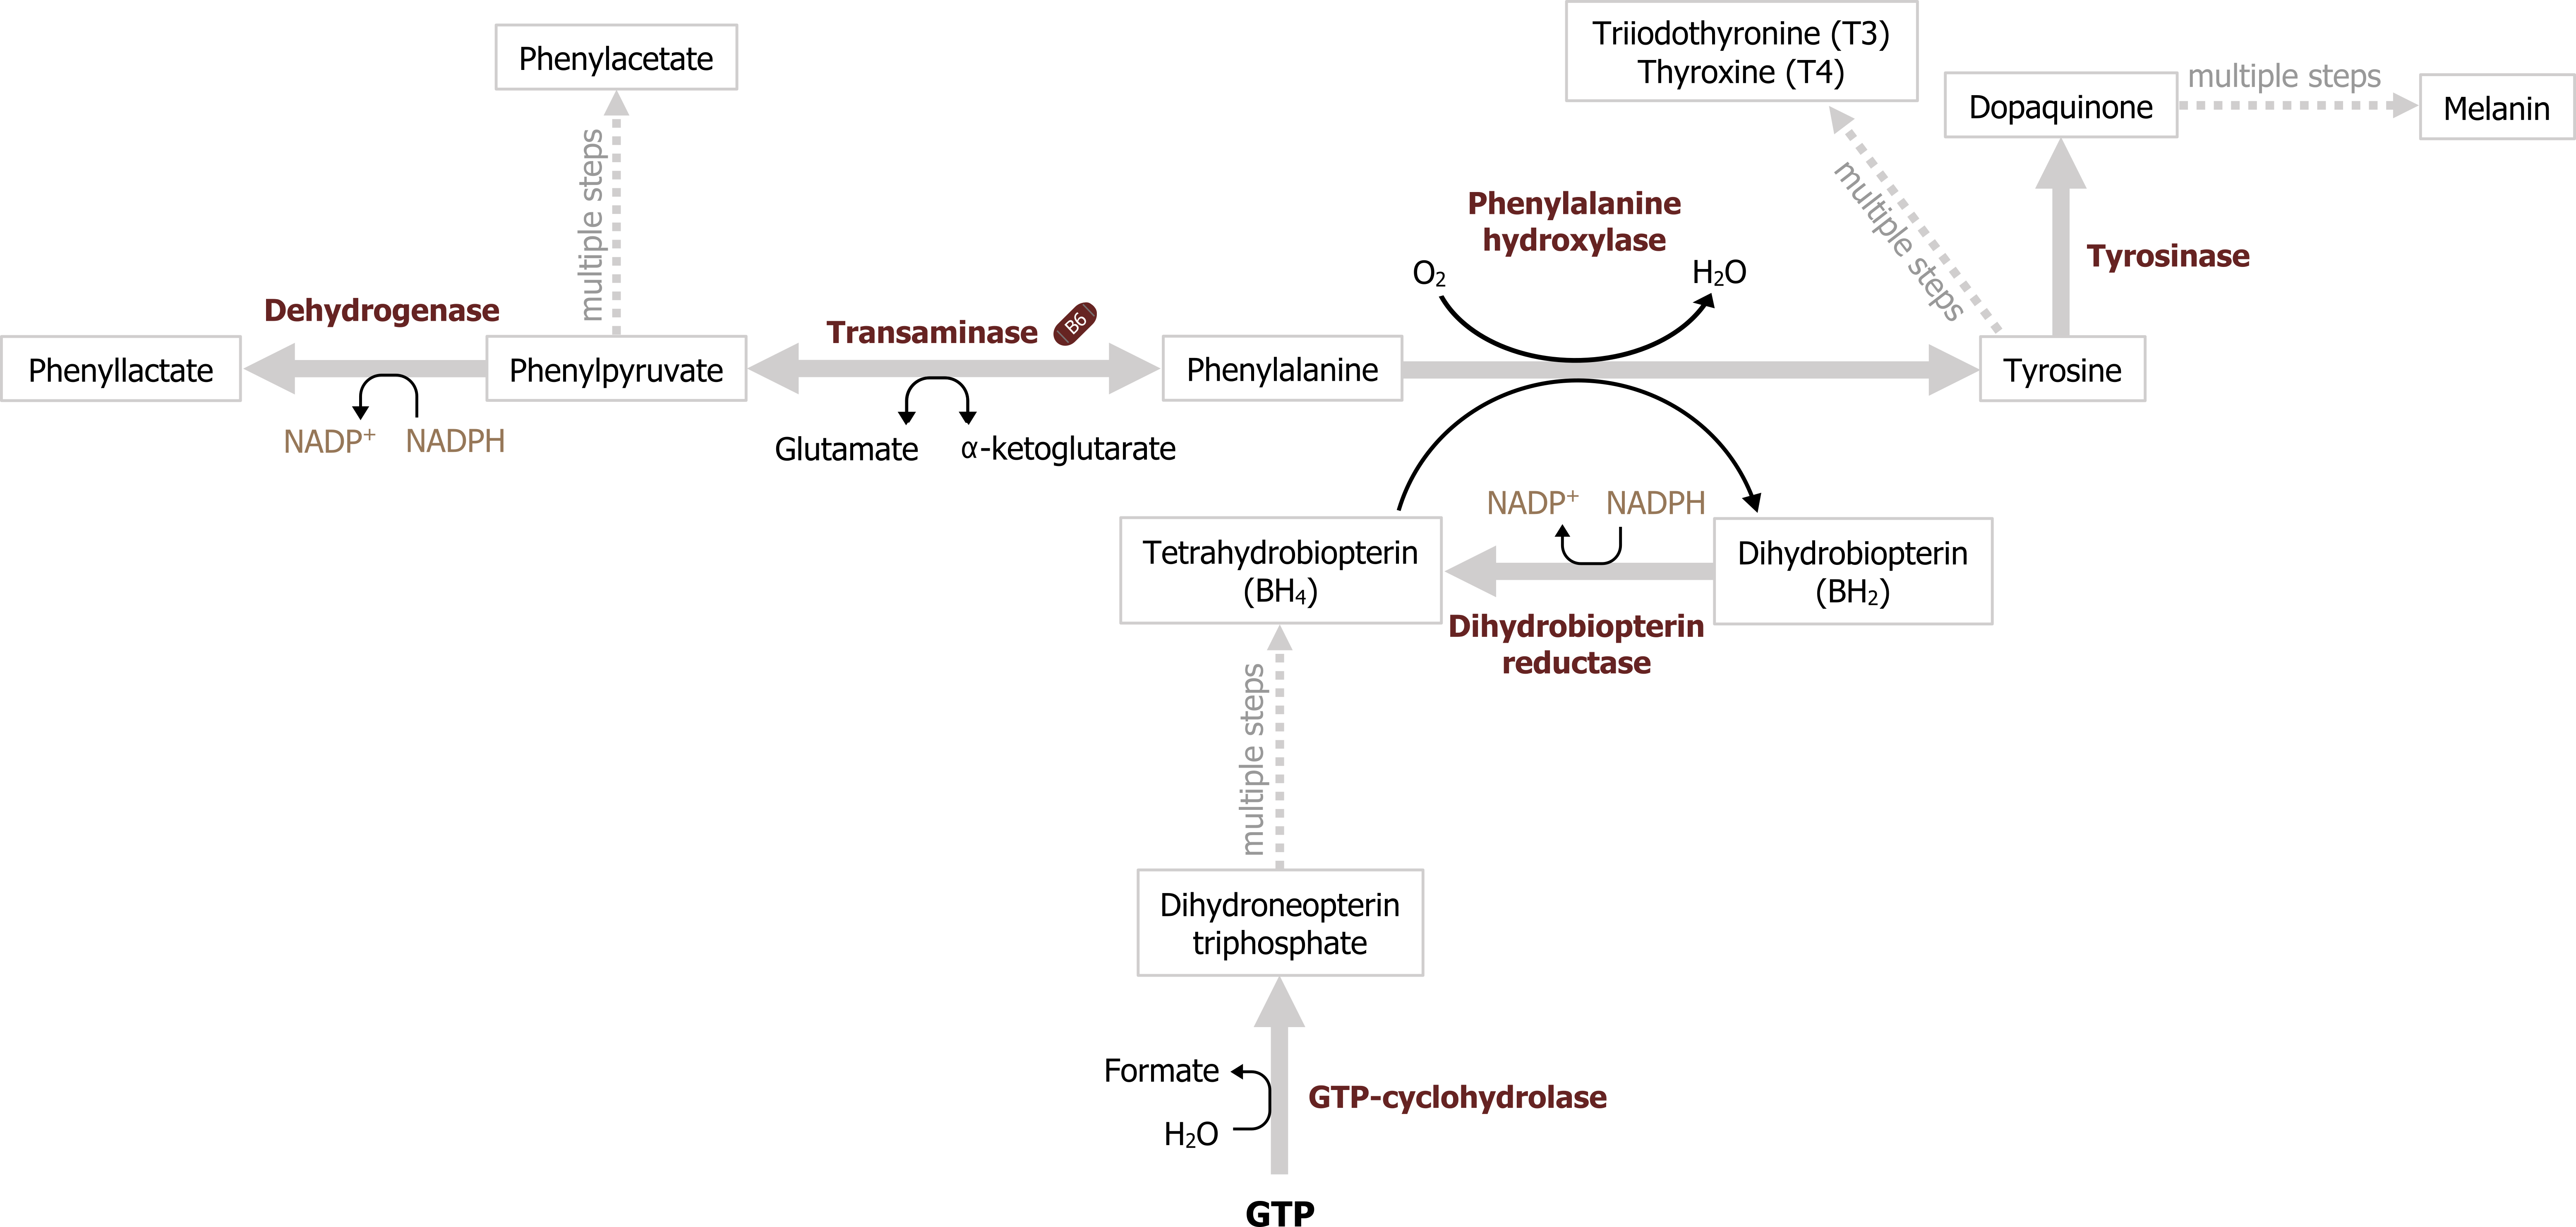 Transaminase with glutamate bidirectional arrow α-ketoglutarate. Transaminase arrow phenylpyruvate arrow enzyme dehydrogenase with NADP+ arrow NADPH to phenyllactate. Phenylpyruvate dotted arrow text multiple steps to phenylacetate. Transaminase arrow phenylalanine arrow enzyme phenylalanine hydroxylase with O2 arrow H2O and BH4 arrow BH2 to tyrosine arrow enzyme tyrosinase to dopaquinone dotted arrow text multiple steps to melanin. Tyrosine dotted arrow text multiple steps to triiodothyronine (T3) thyroxine (T4). BH2 arrow enzyme dihydrobiopterin reductase with NADPH arrow NADP+ to BH4. GTP arrow enzyme GTP-cyclohydrolase with H2O arrow formate to dihydroneopterin triphosphate dotted arrow text multiple steps to BH4.